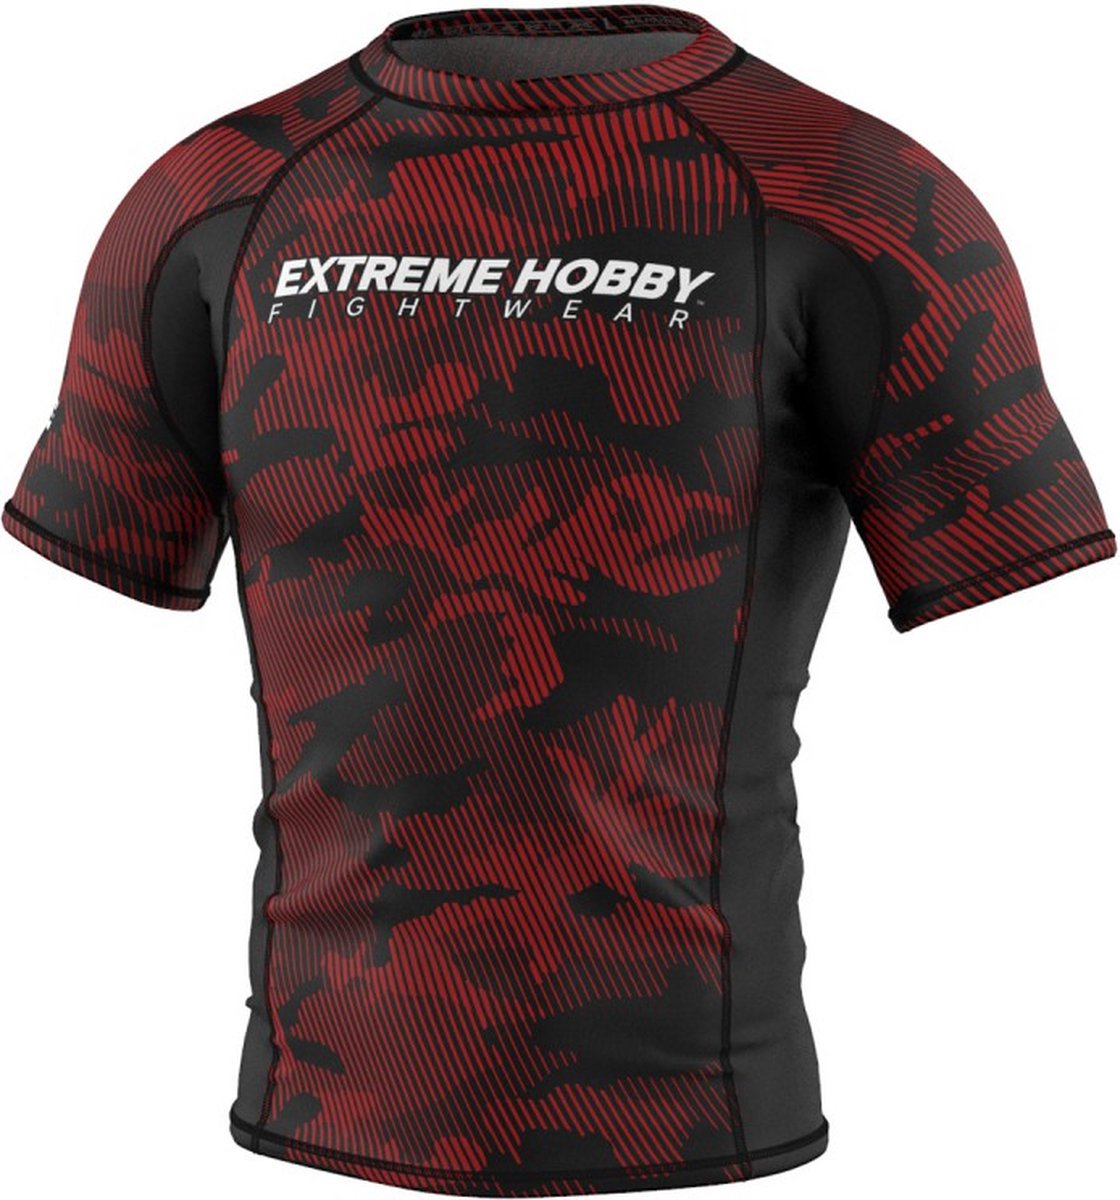 Extreme Hobby - Havoc Red - Rashguard Short Sleeve - Compression Shirt - Rood, Zwaart - Maat XL